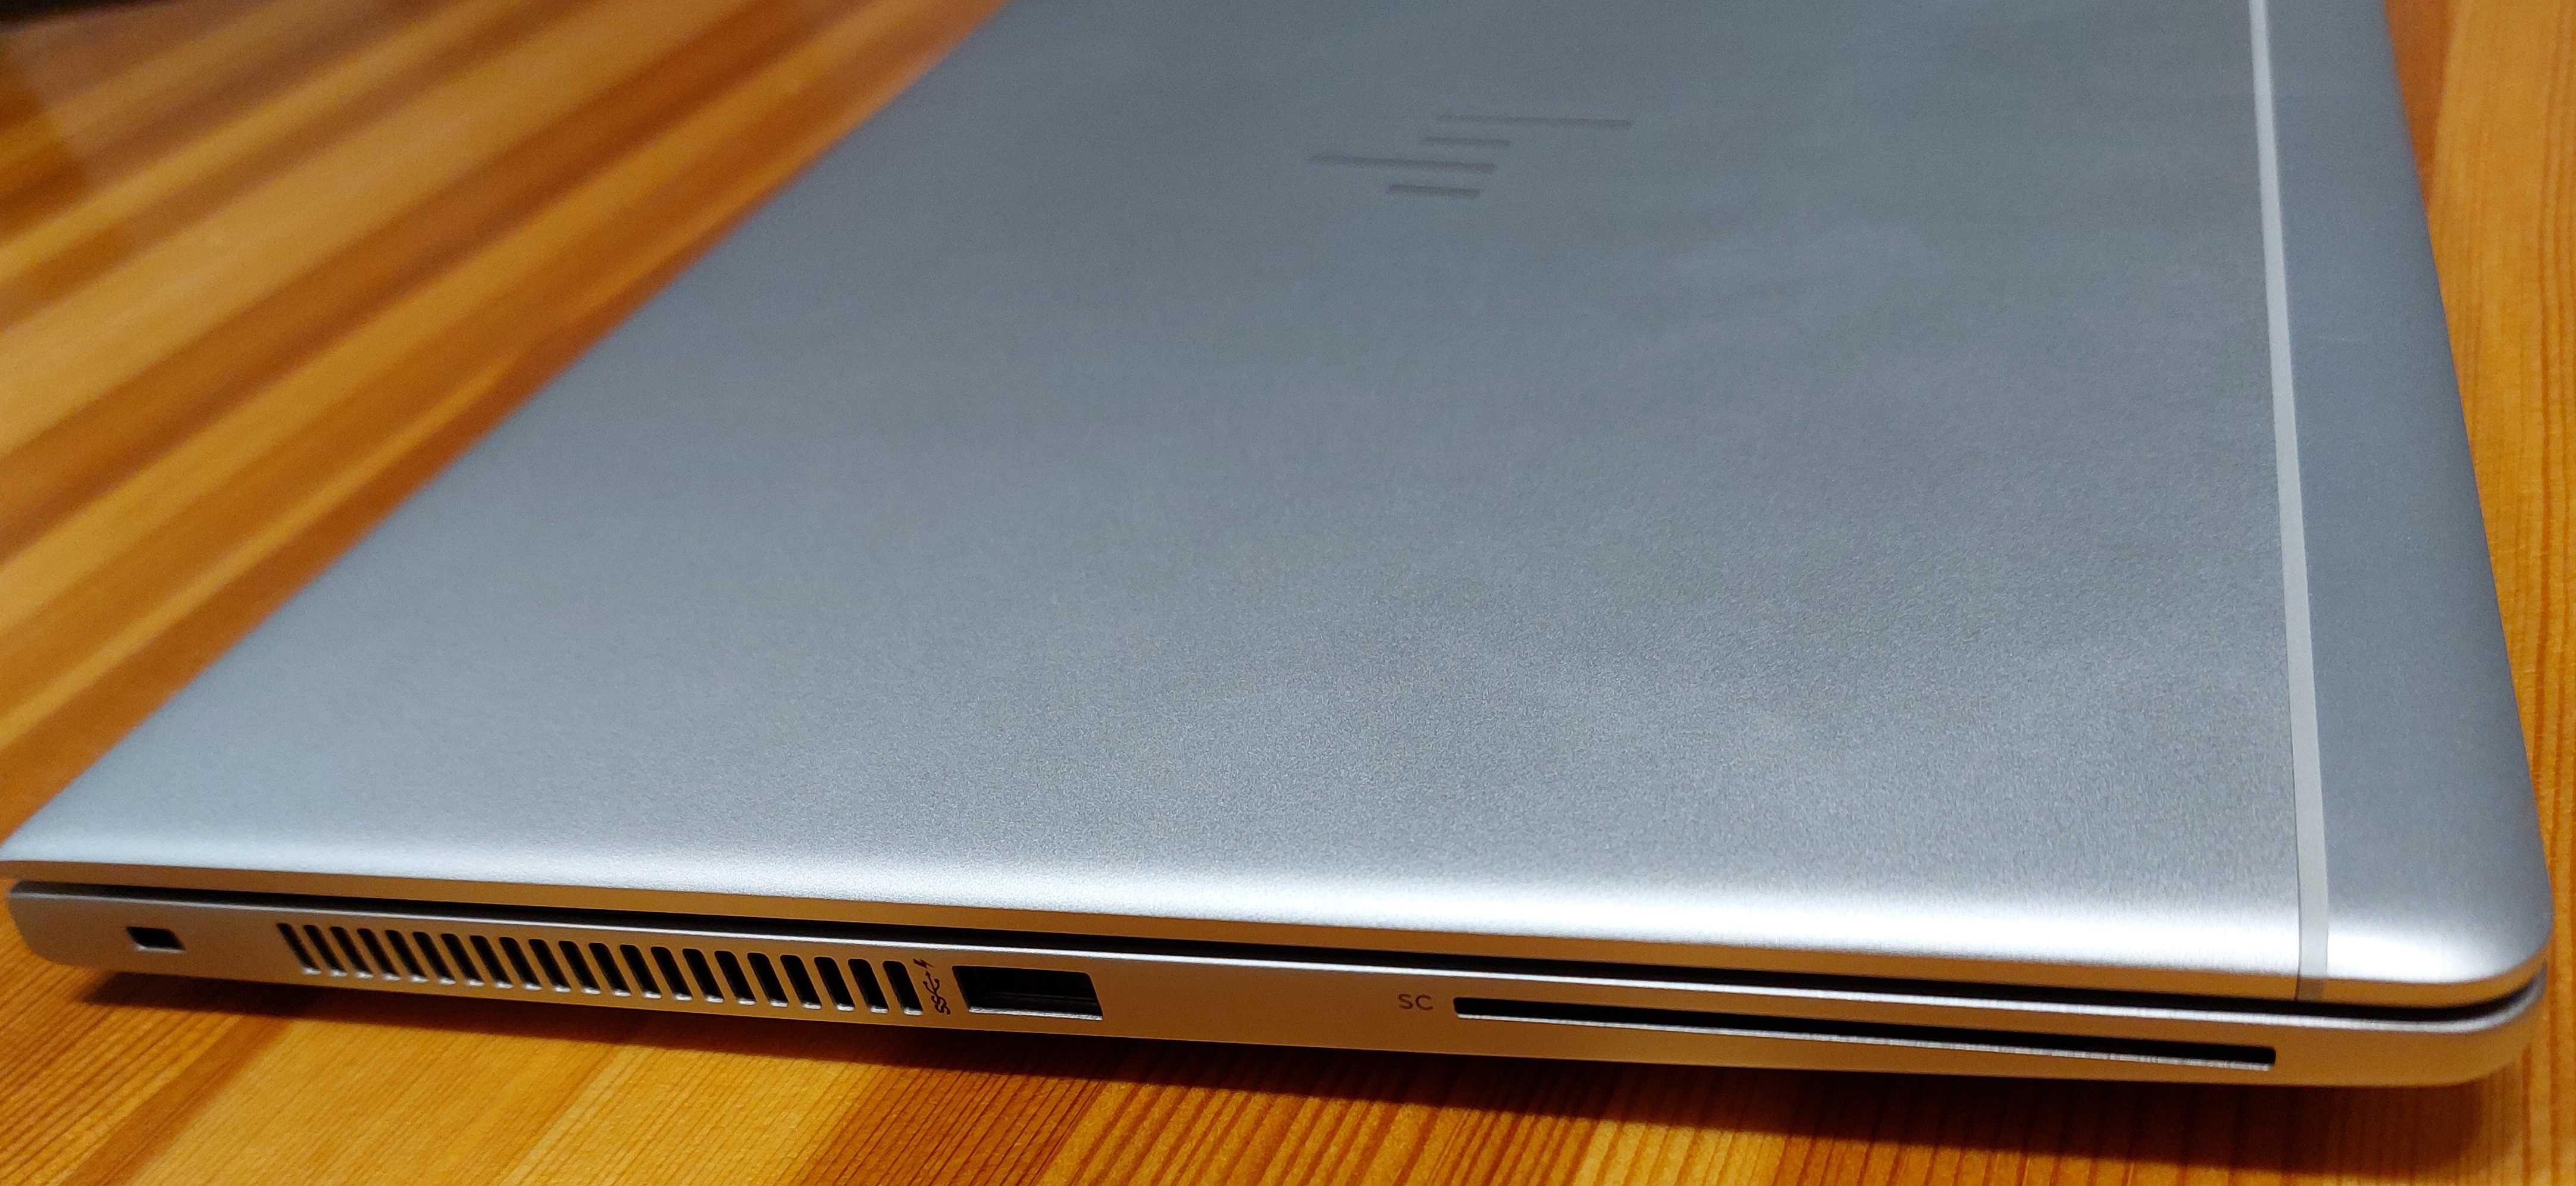 HP EliteBook 830 G5 240 SSD/ 8GB RAM, edycja limitowana BANG & OLUFSEN